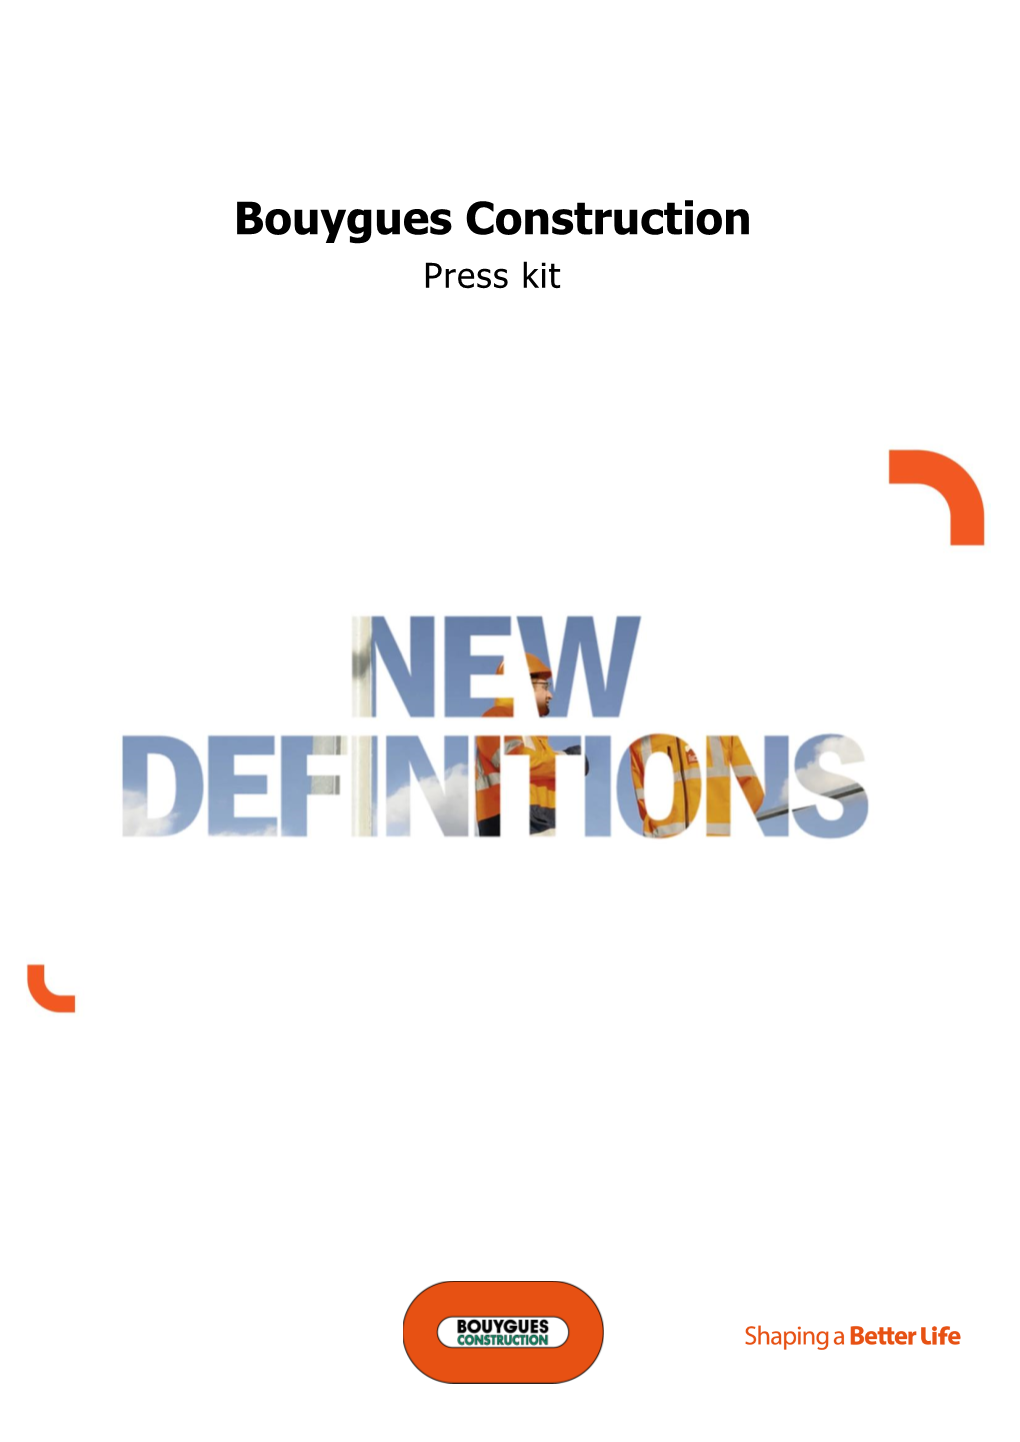 Bouygues Construction Press Kit